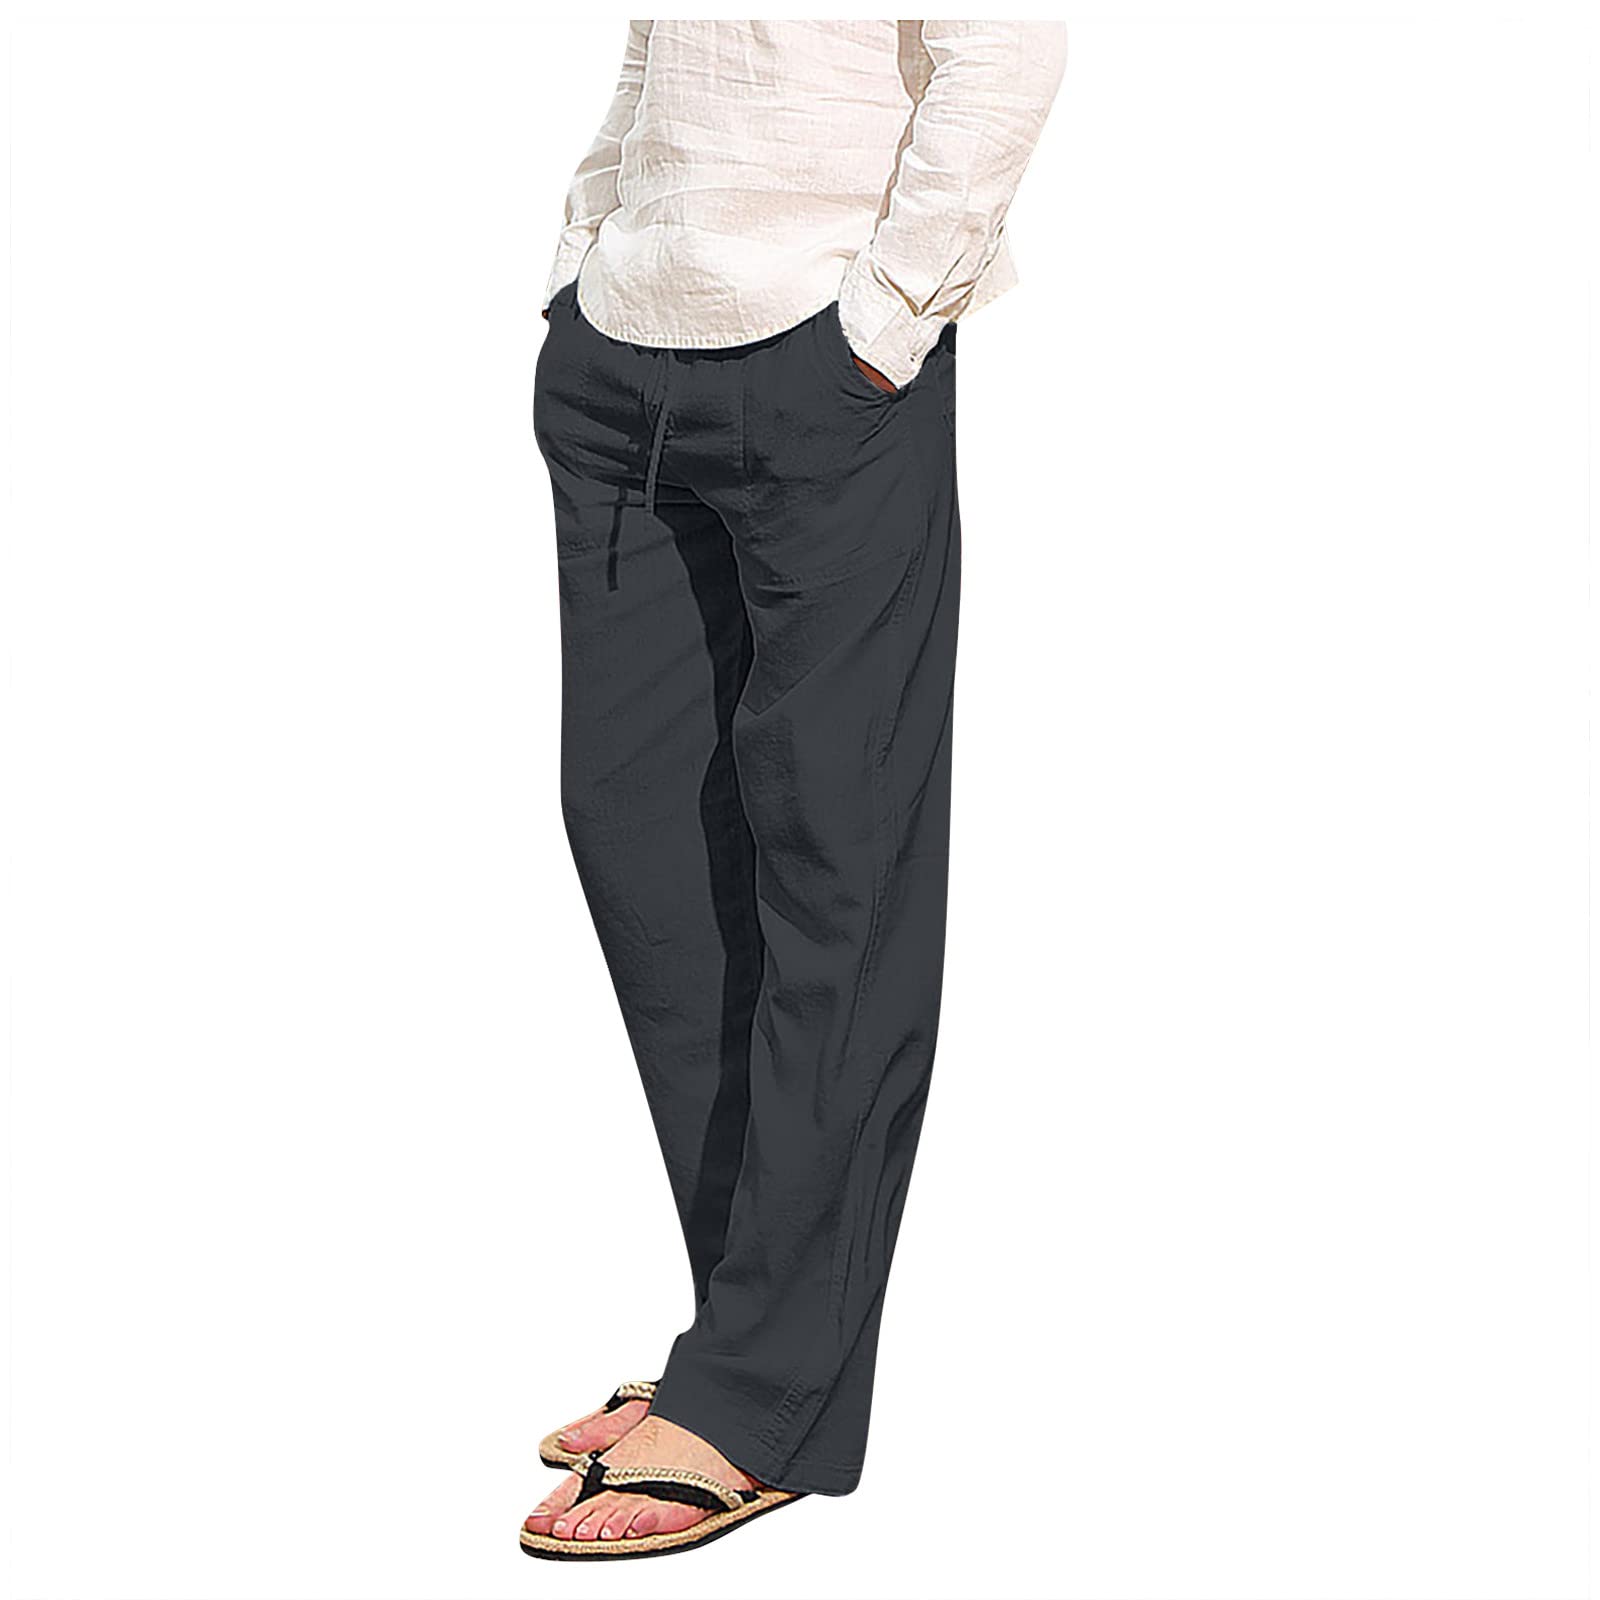 LINEA UOMO Men's Tracksuit Athletic Comfort Pants Jacket Size 4X